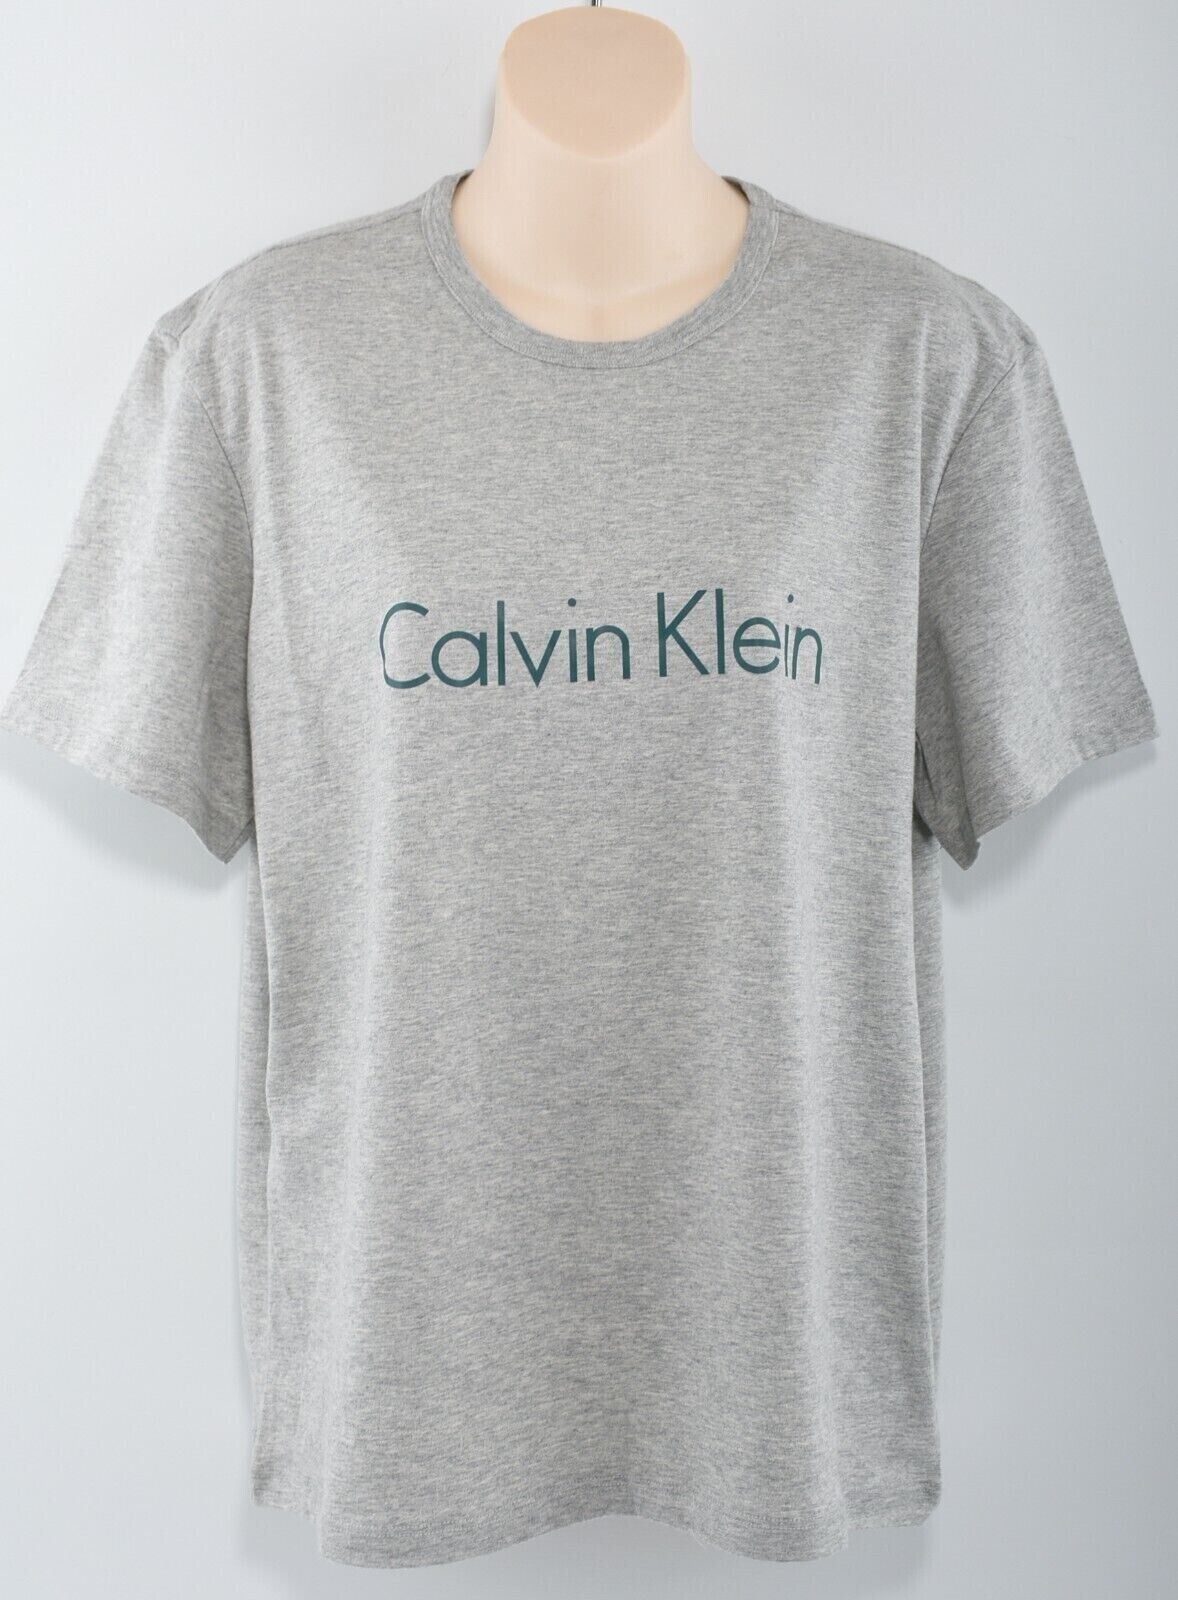 CALVIN KLEIN Women's Lounging / Sleepwear T-shirt, Grey Heather, size S (UK 10)